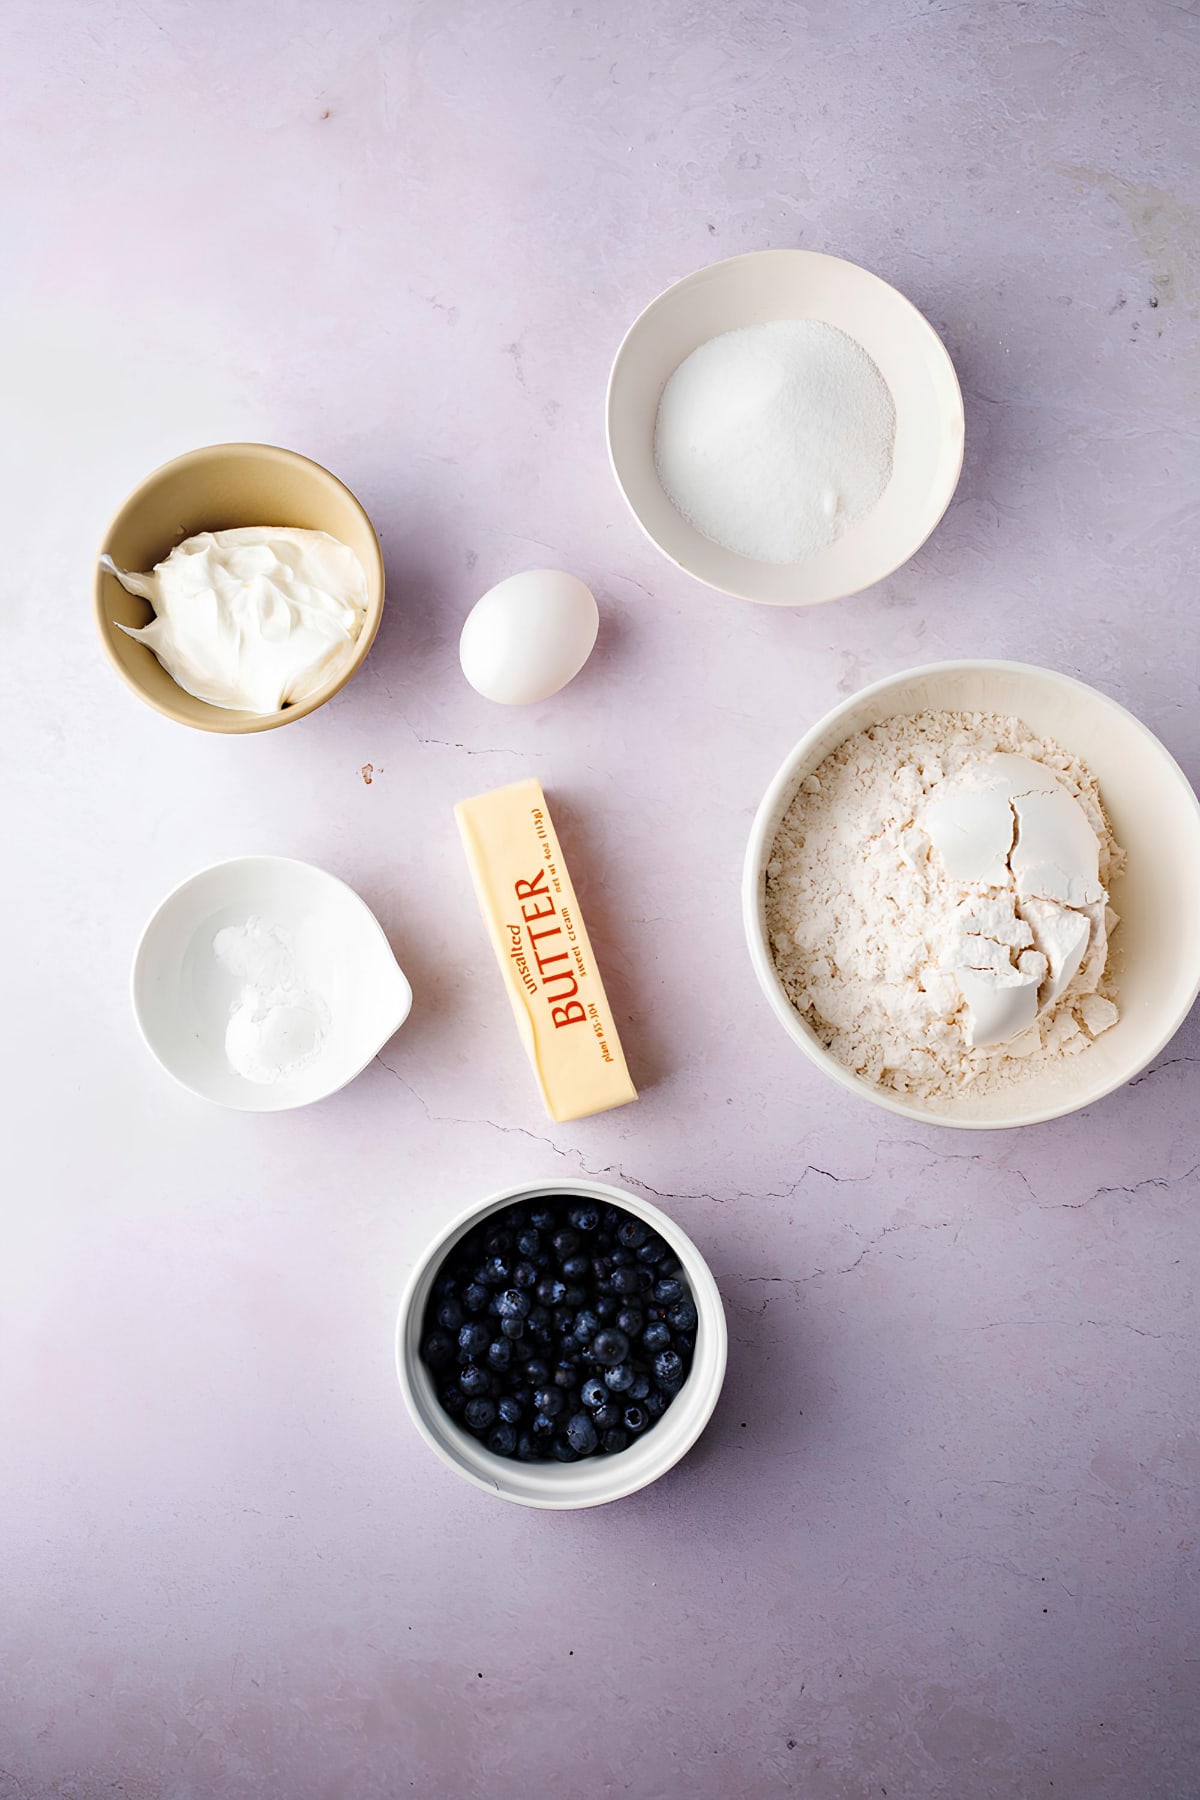 Homemade Scone Ingredients: Flour, Unsalted Butter, White Sugar, Baking Powder, Soda, Salt, Eggs, Sour Cream and Blueberries